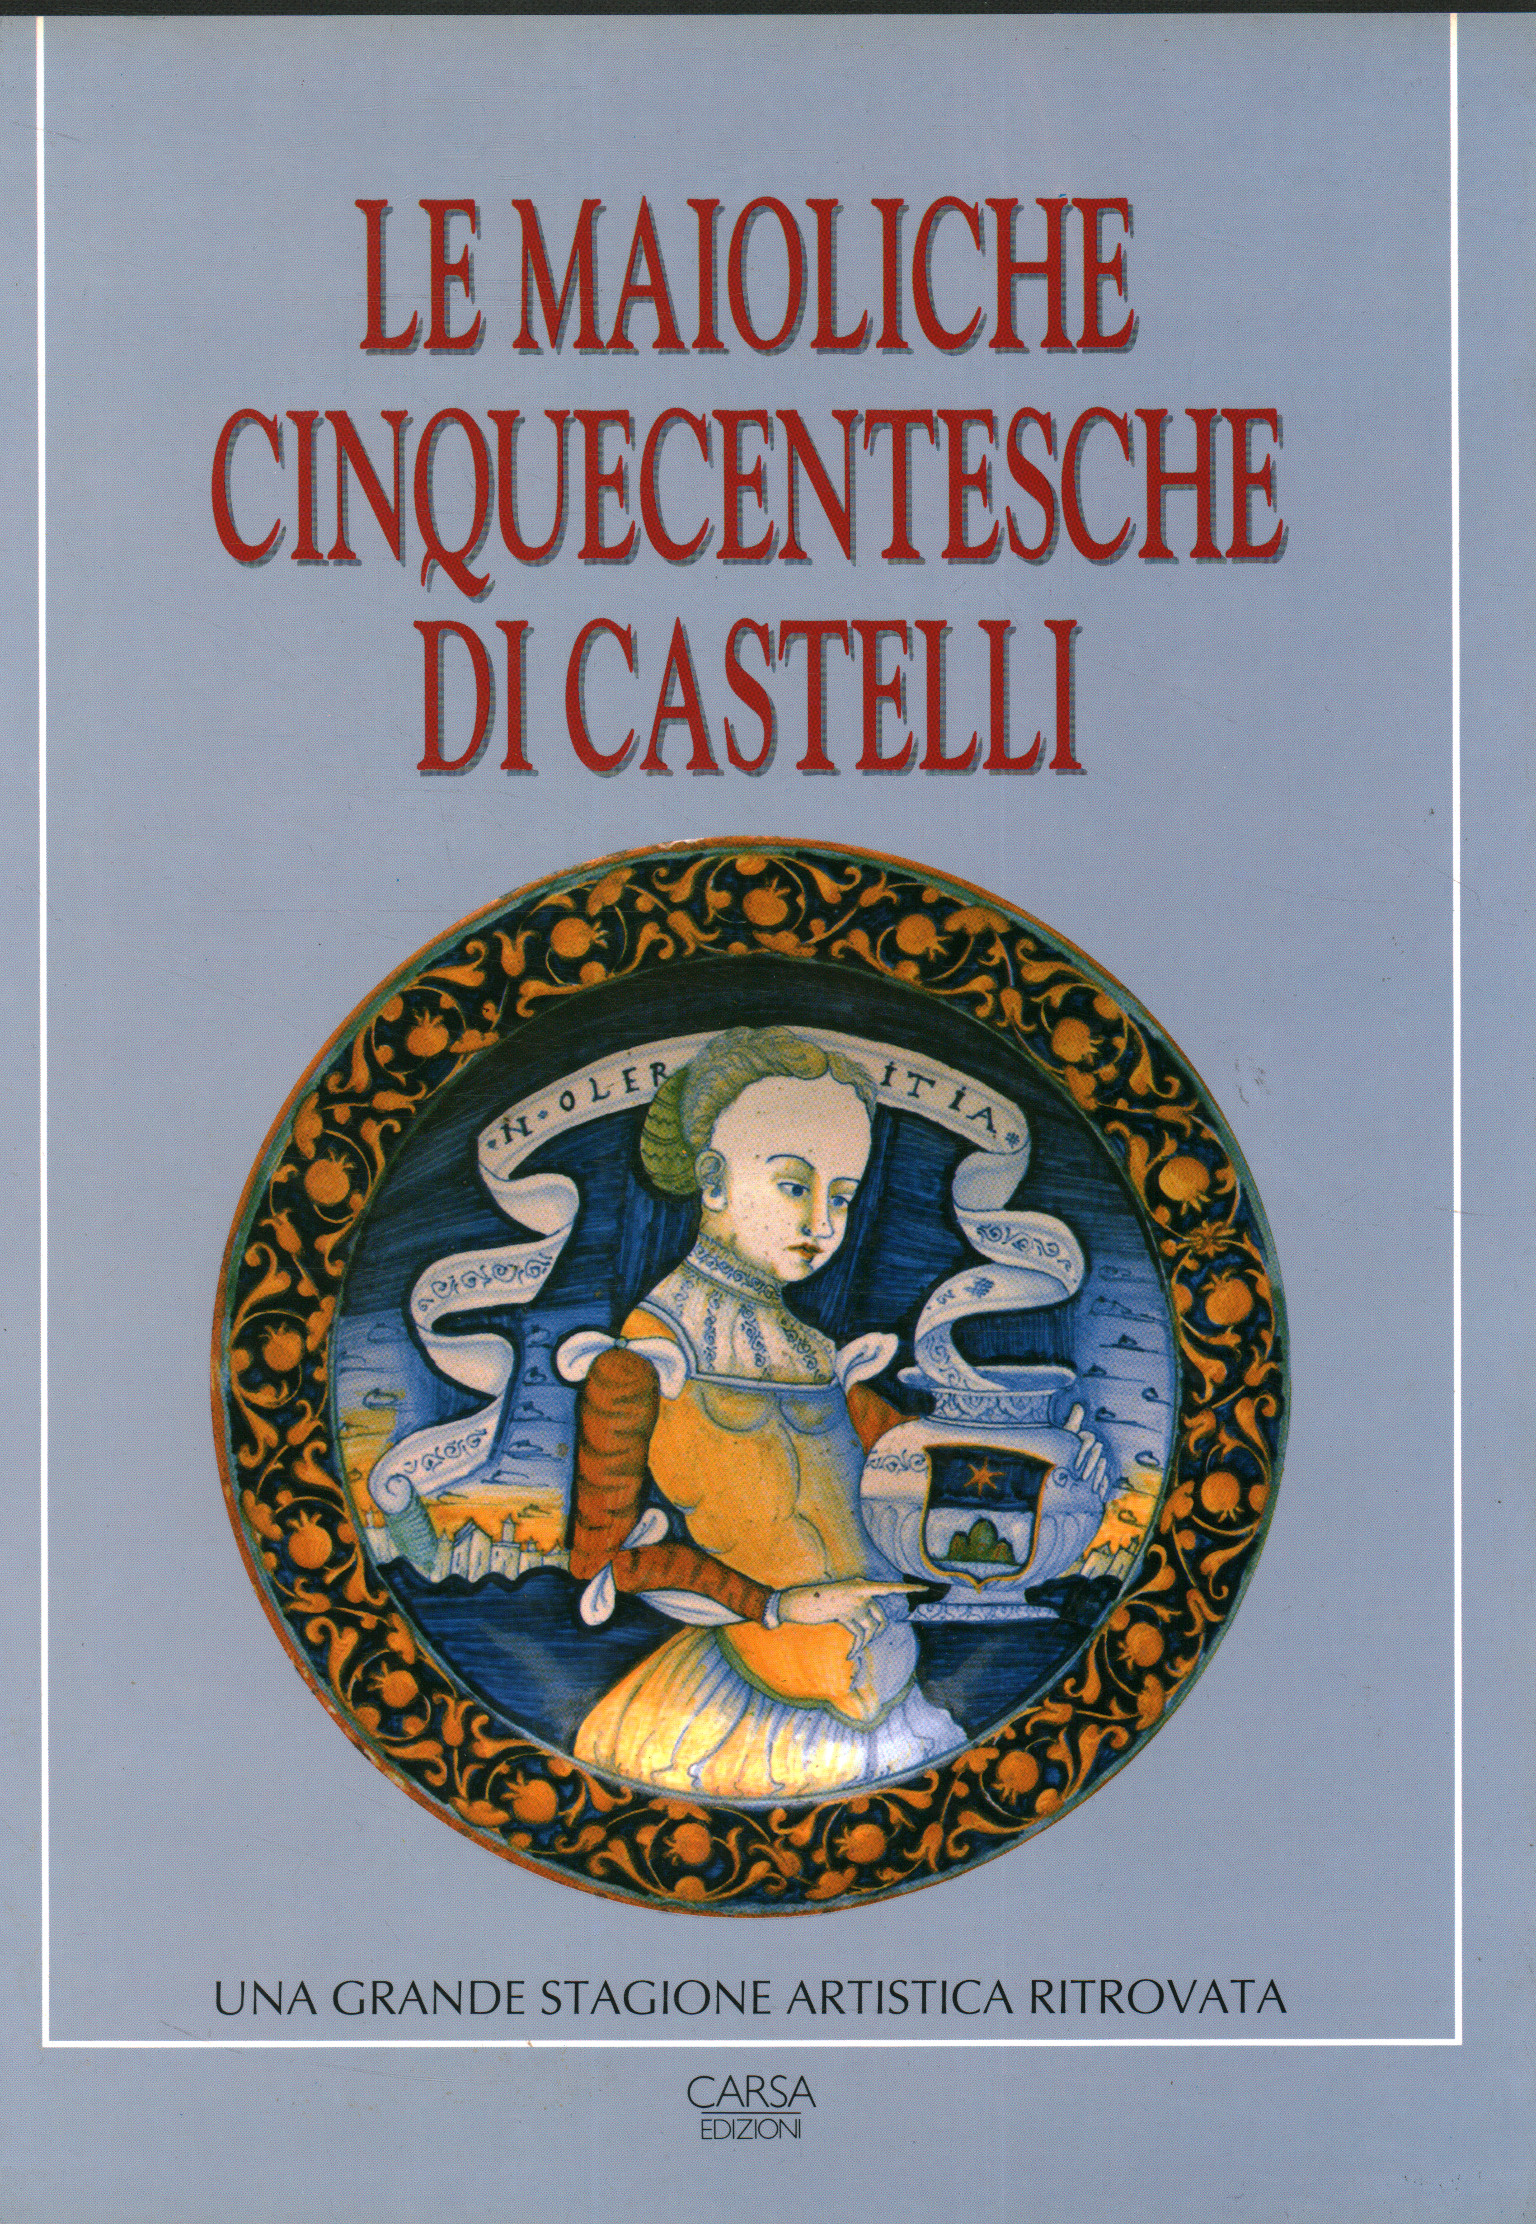 La mayólica del siglo XVI de Castelli